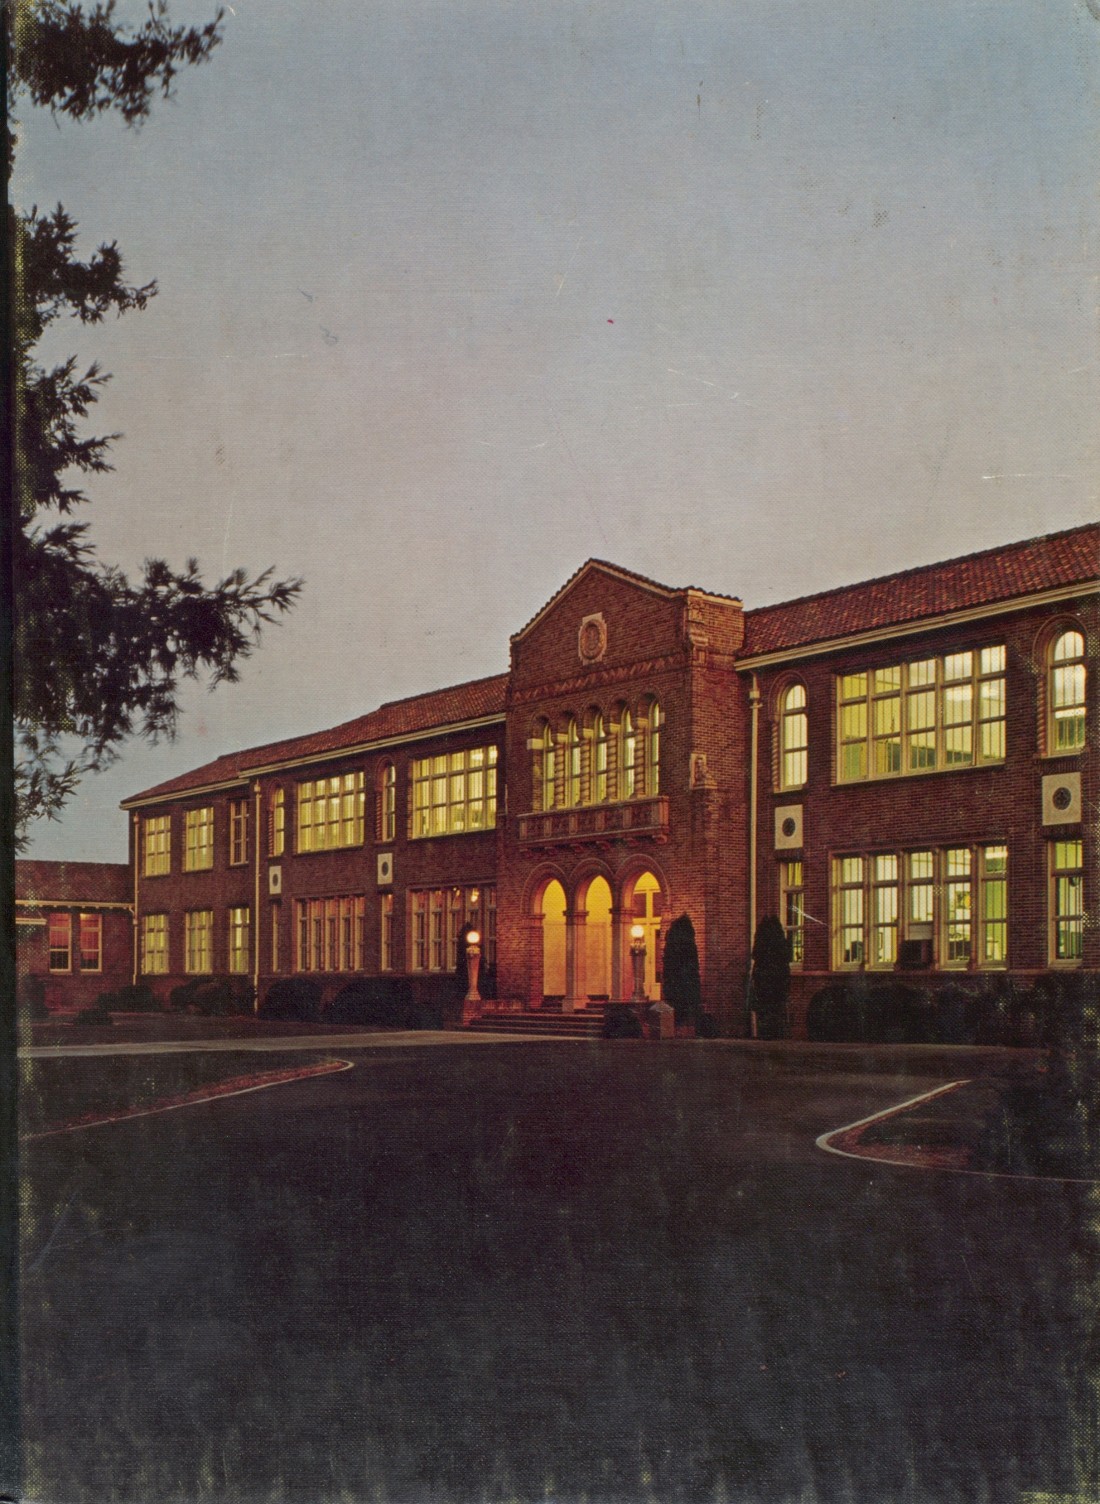 1972 yearbook from Turlock High School from Turlock, California